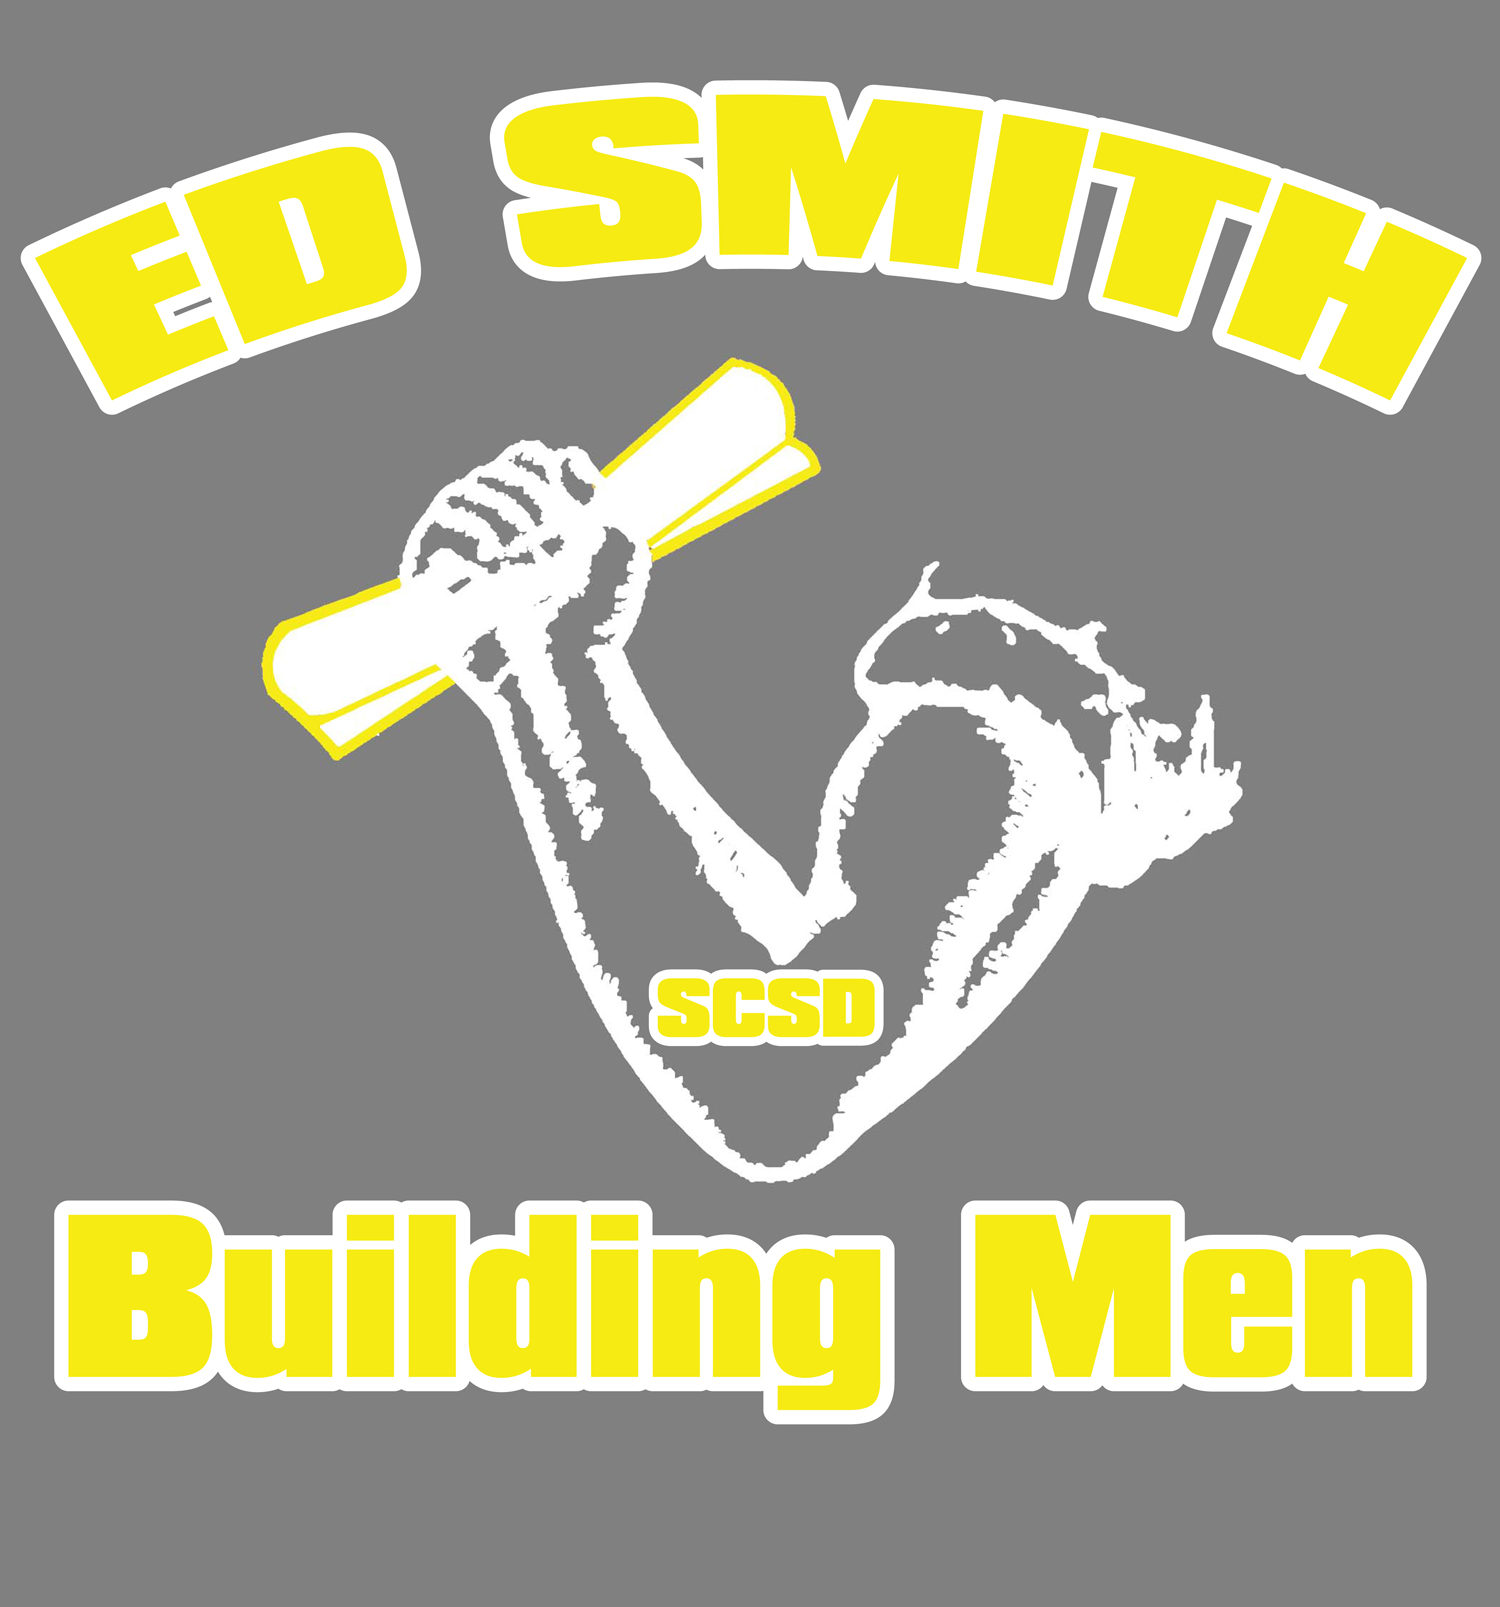 Ed Smith Building Men